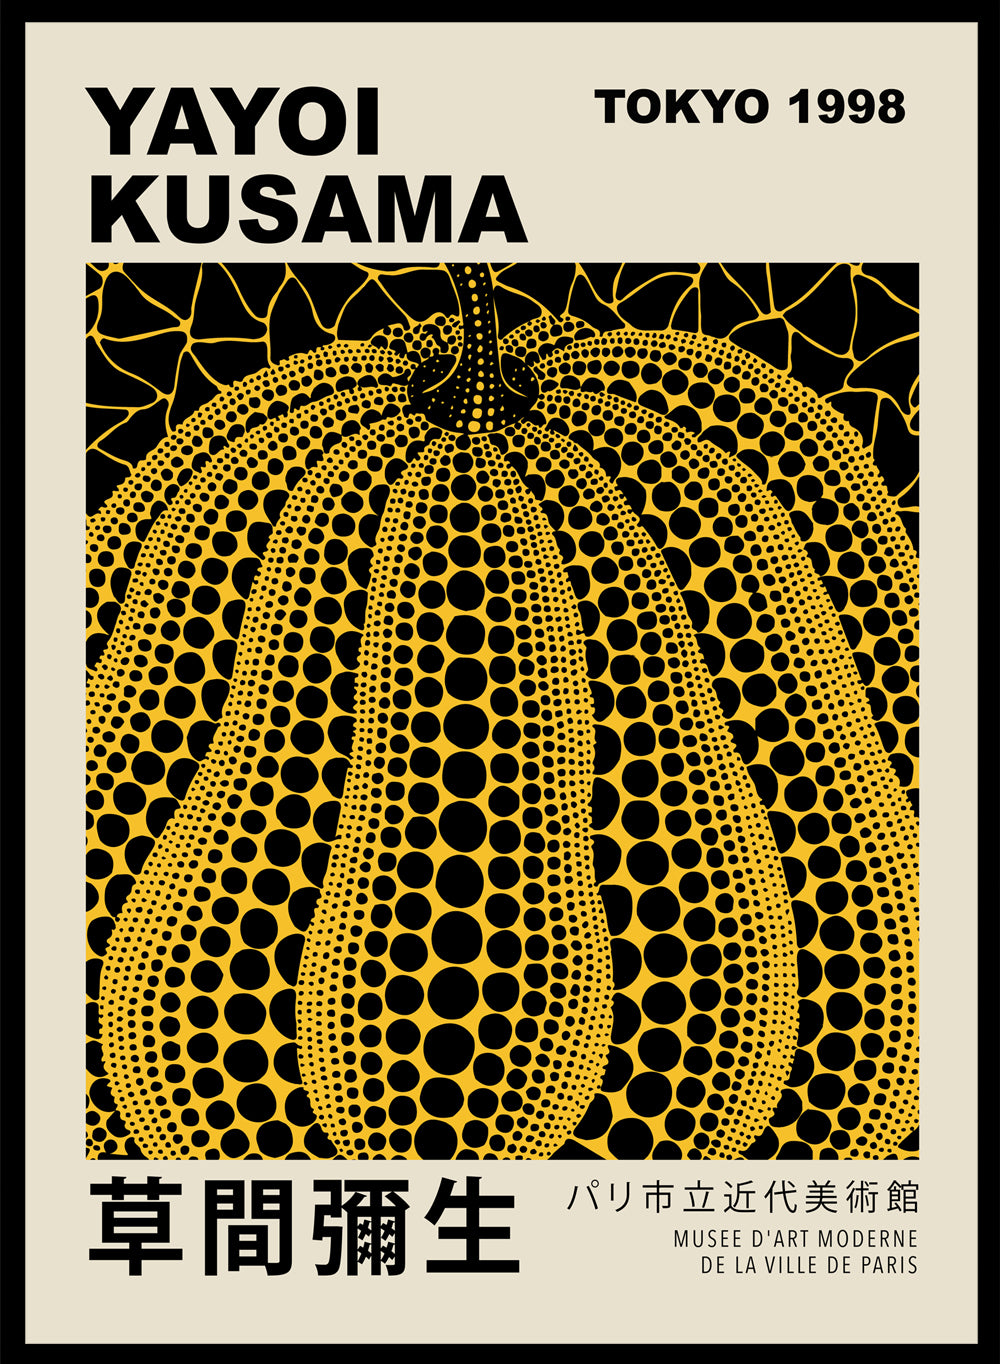 Pumpkin Forever Inspired by Yayoi Kusama Art Print